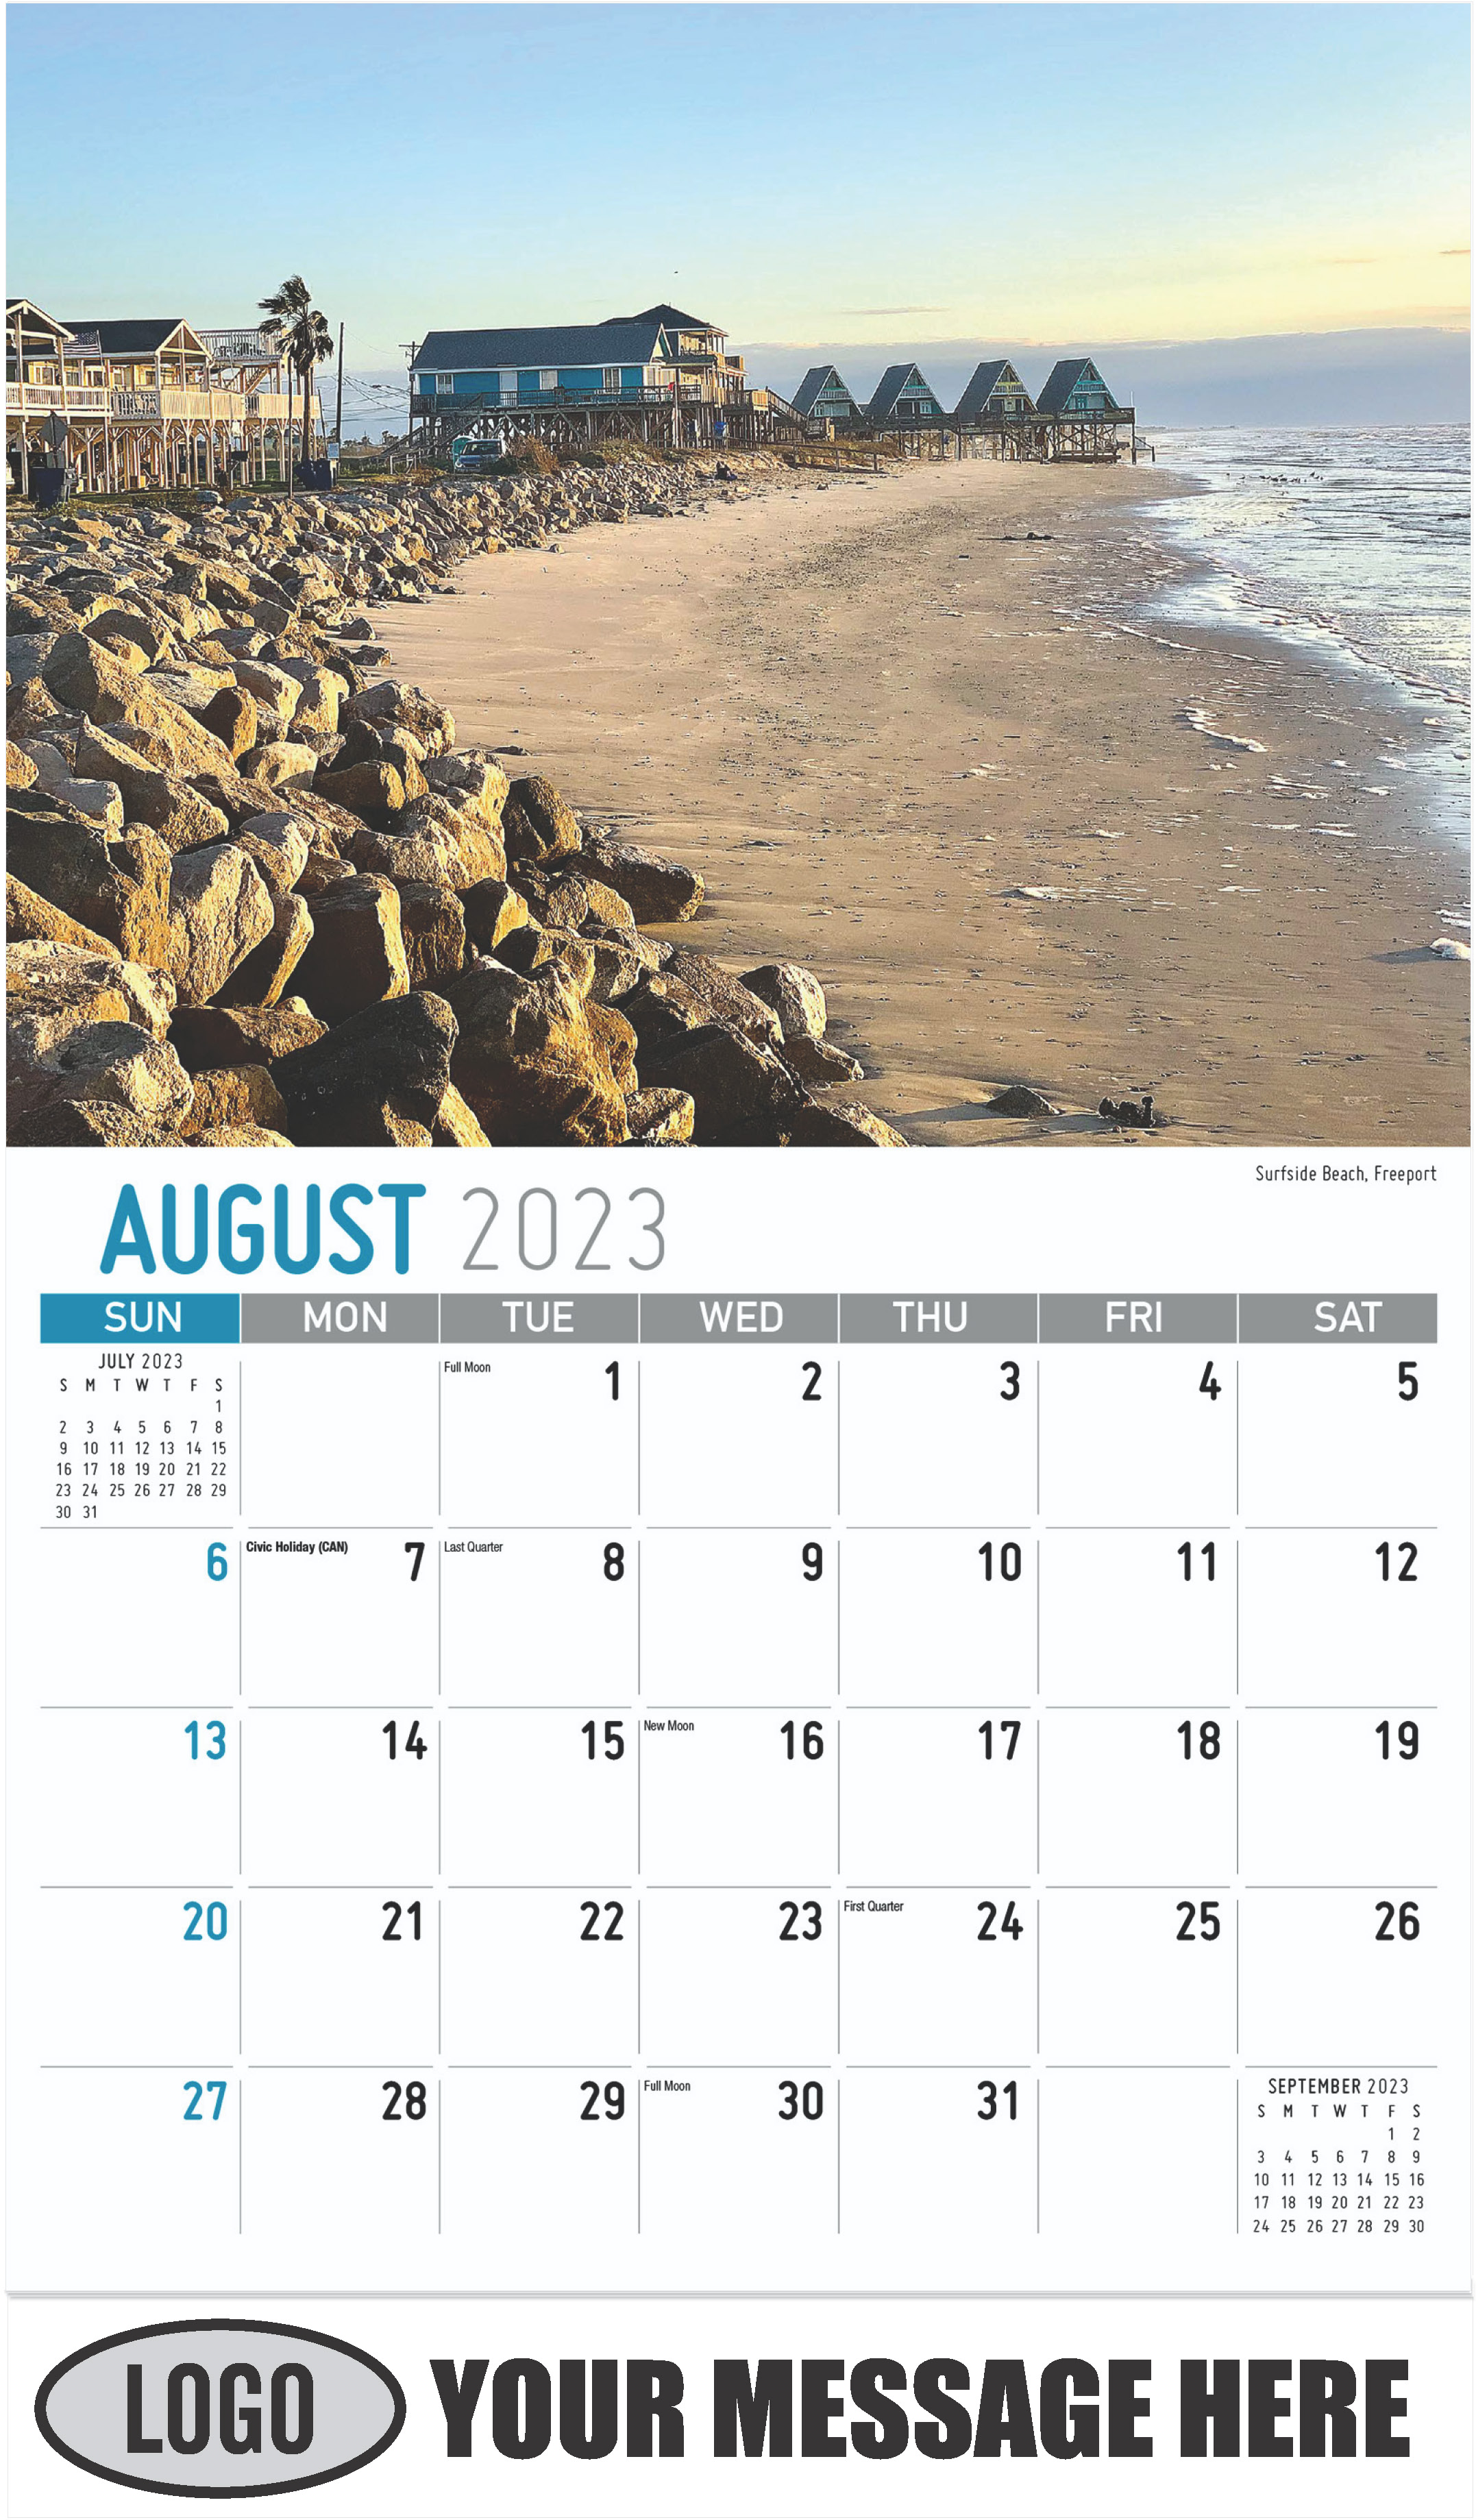 Surfside Beach, Freeport - August - Scenes of Texas 2023 Promotional Calendar